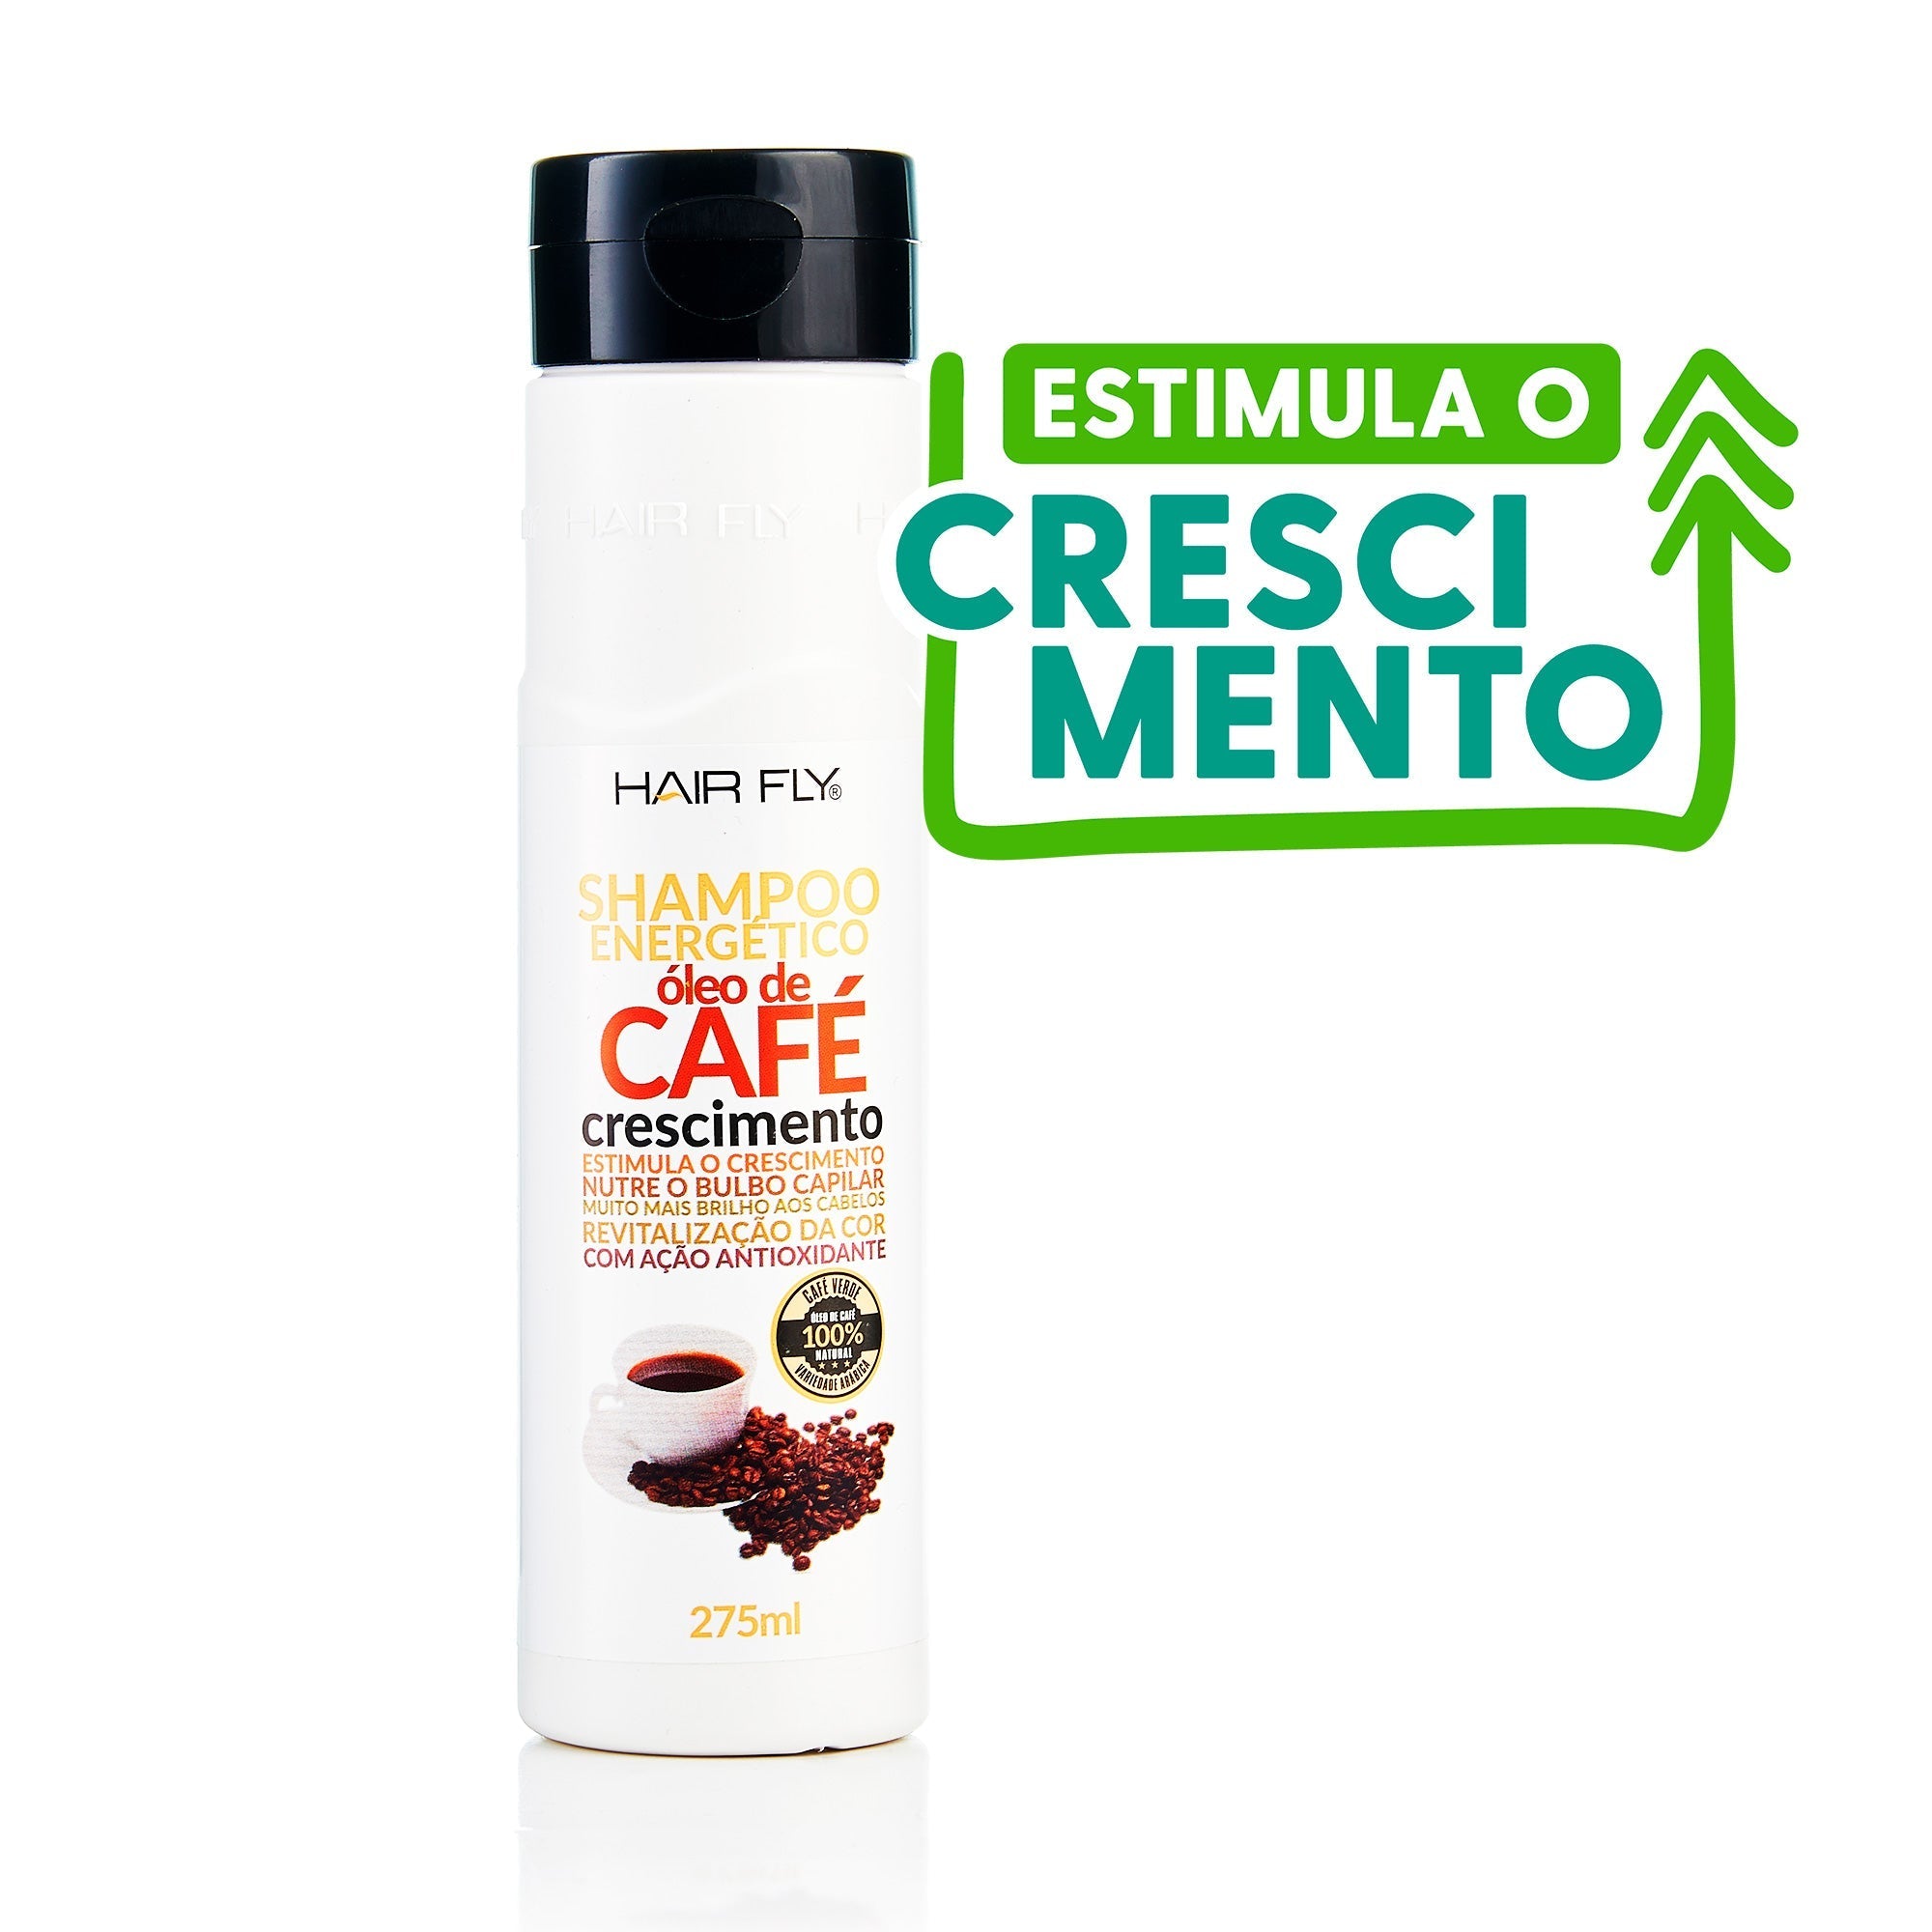 Hair Fly Hair Shampoo Hair Fly Energetic Shampoo Coffee Oil 275ml